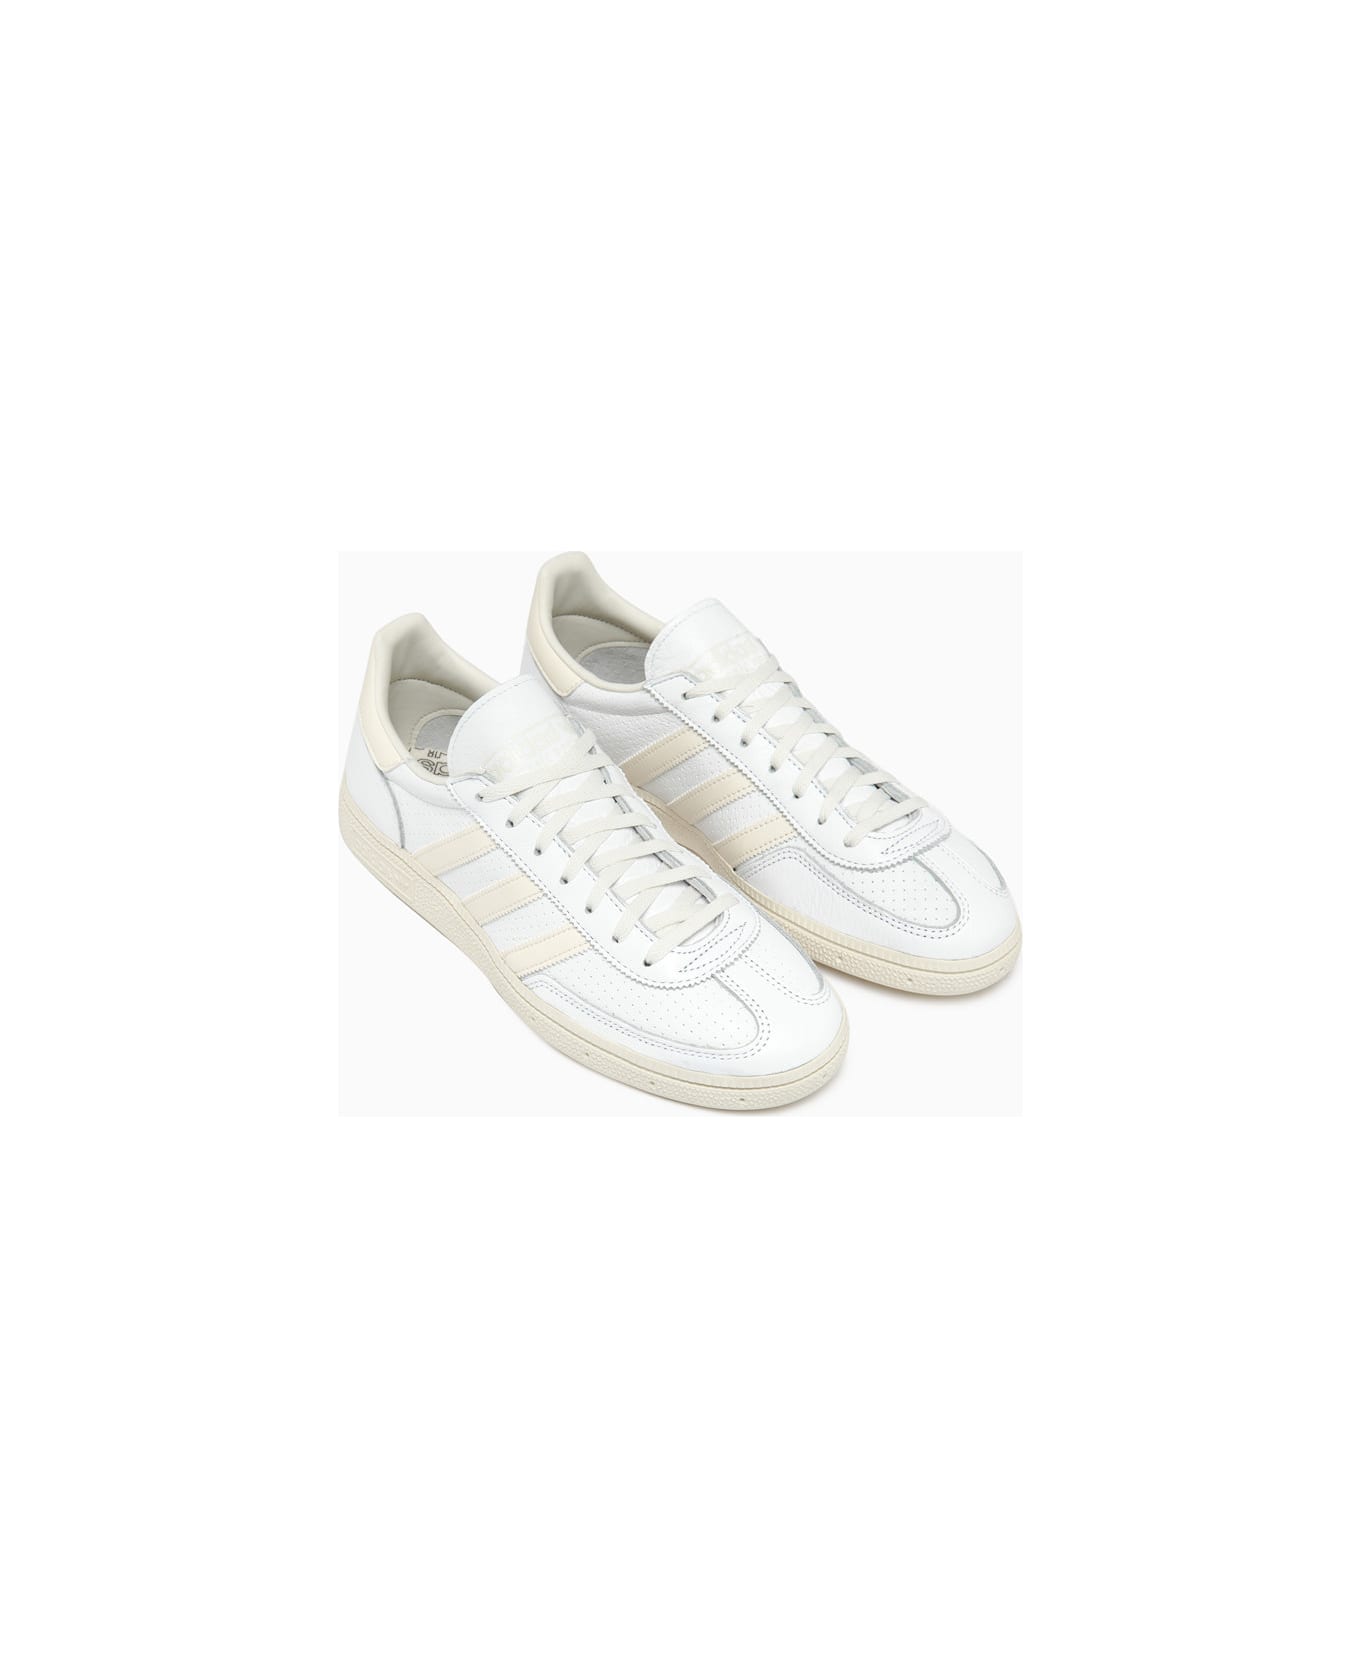 Adidas Handball Spezial Sneakers Ie9837 - WHITE